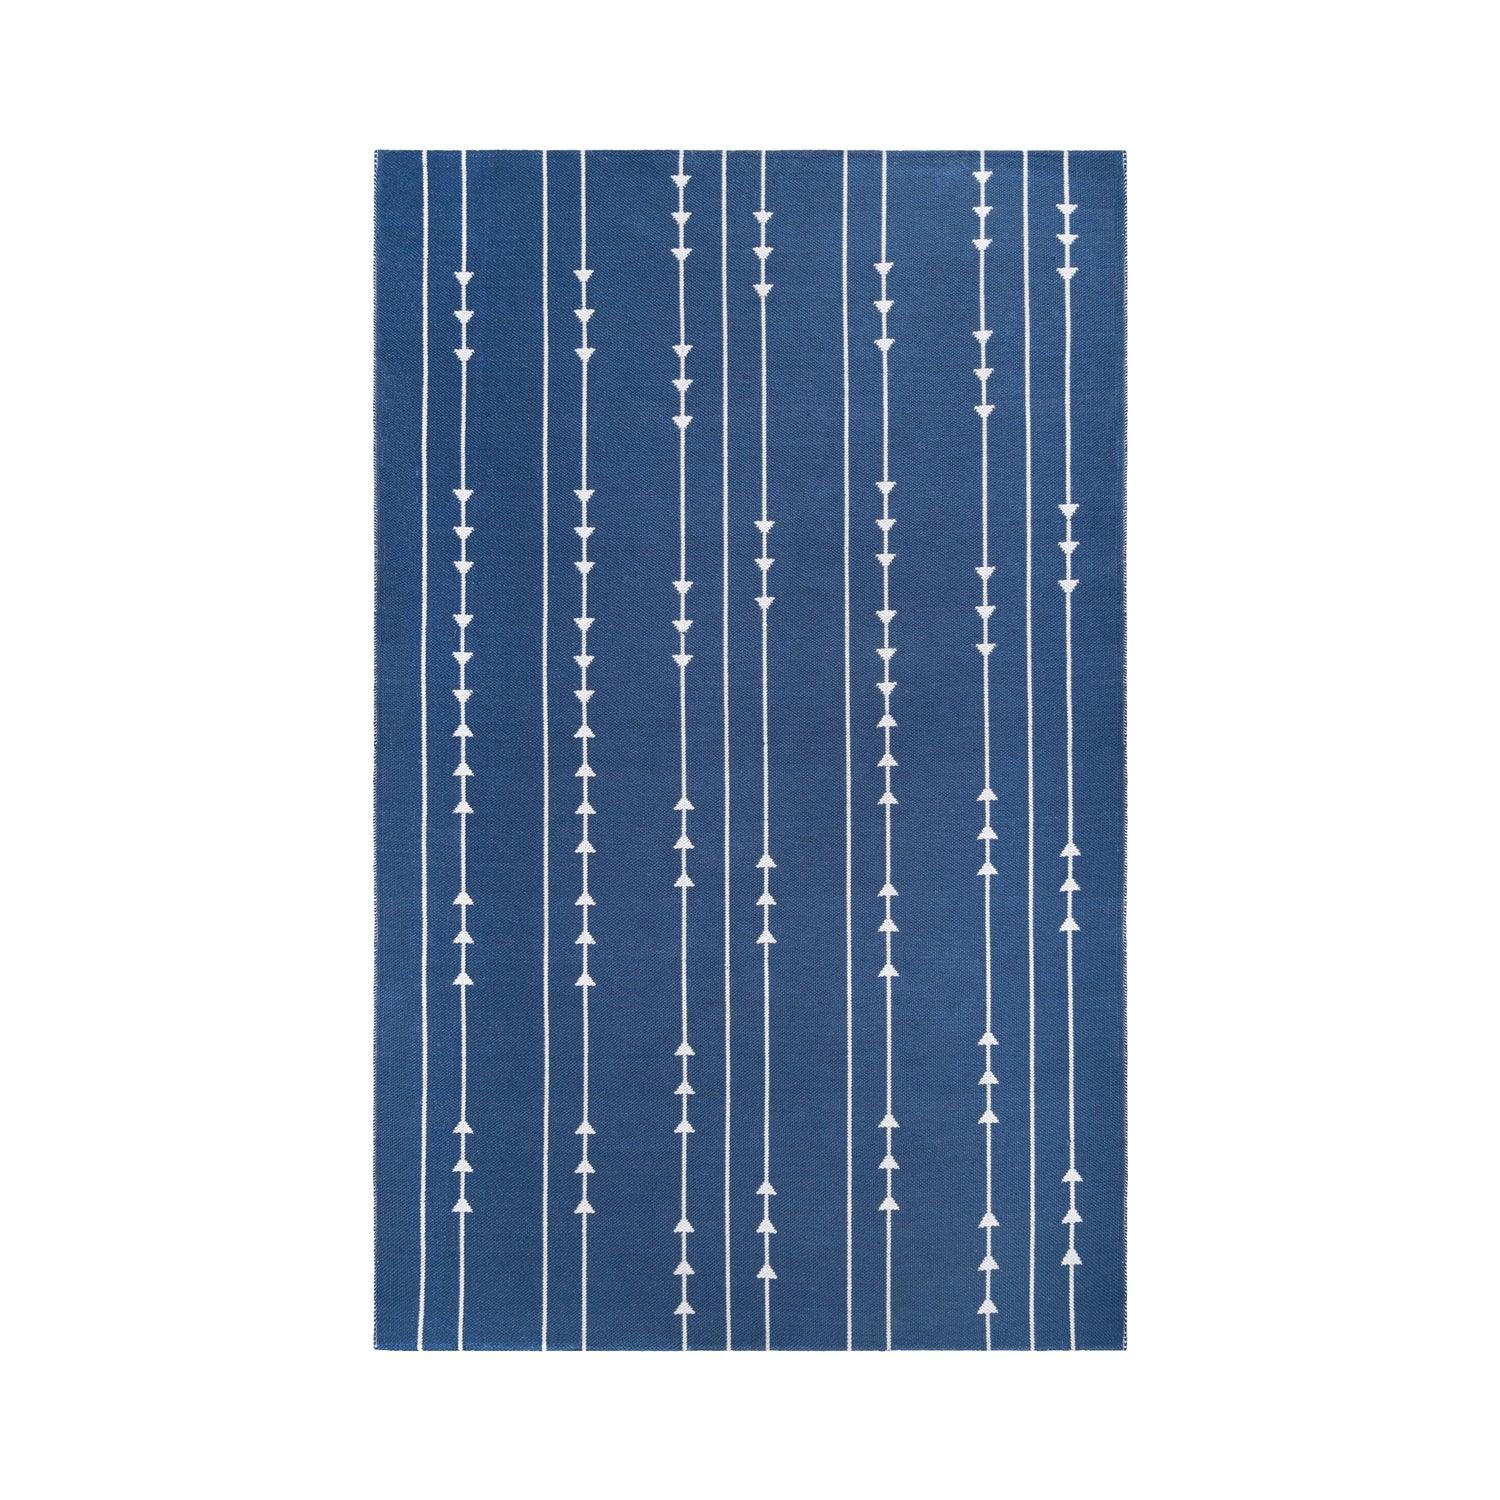  Superior Bohemian Arrow Line Pattern Indoor Outdoor Area Rug- Navy Blue